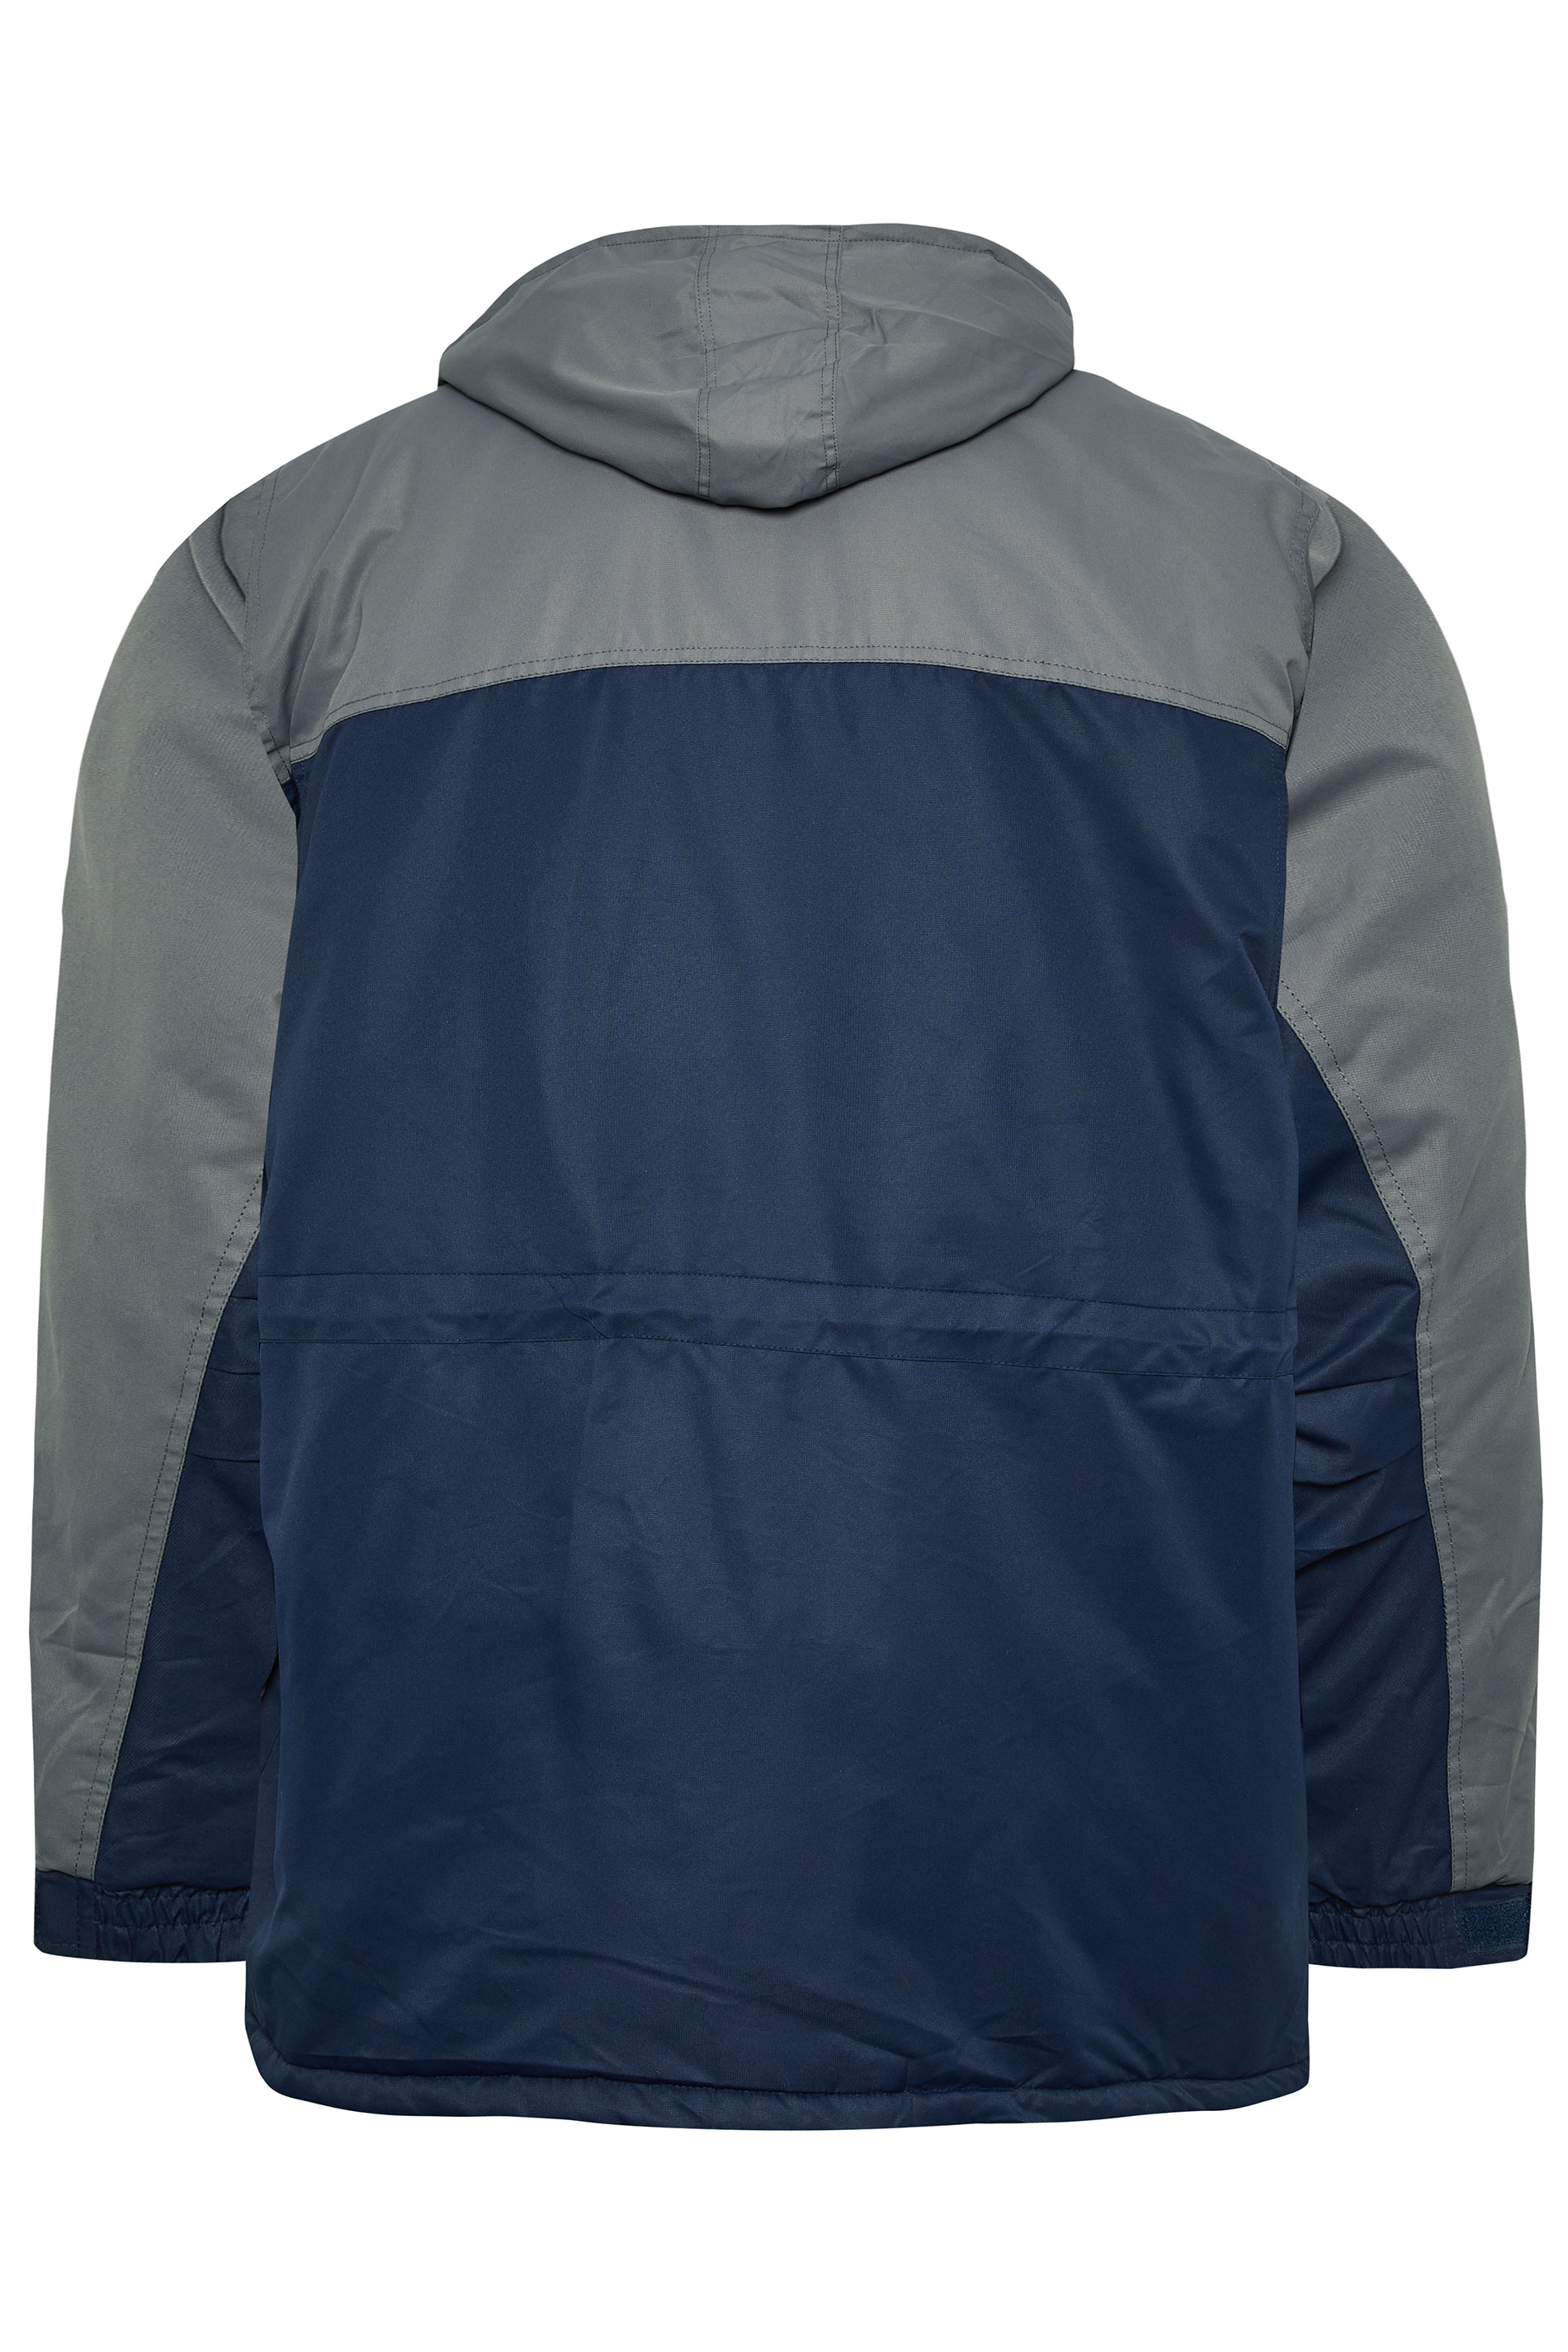 BadRhino Big & Tall Grey & Blue Fleece Lined Hooded Coat | BadRhino 2